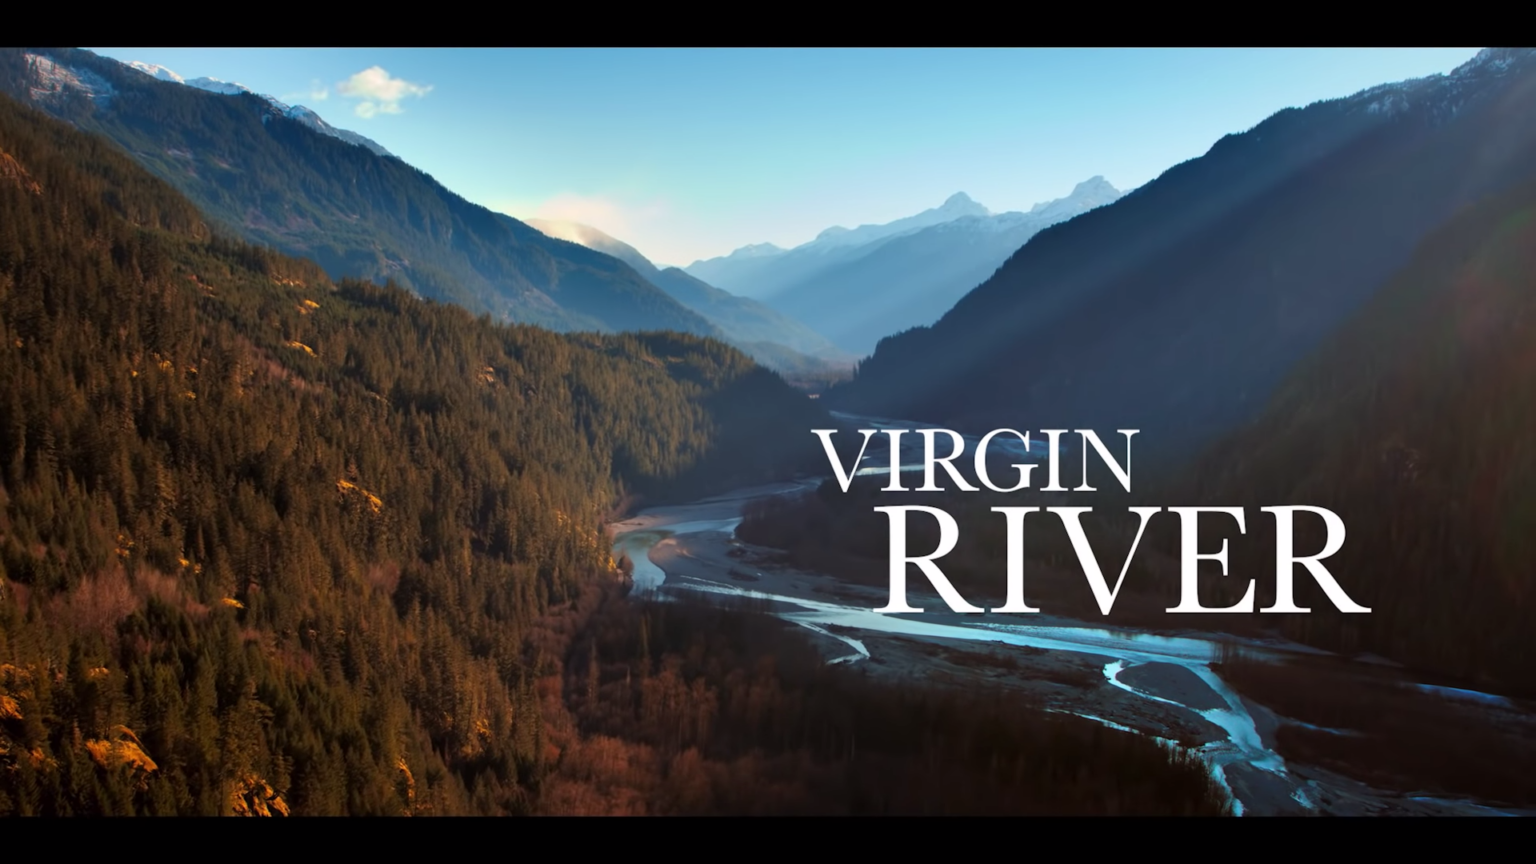 Virgin River [TRAILER] Coming to Netflix December 6, 2019